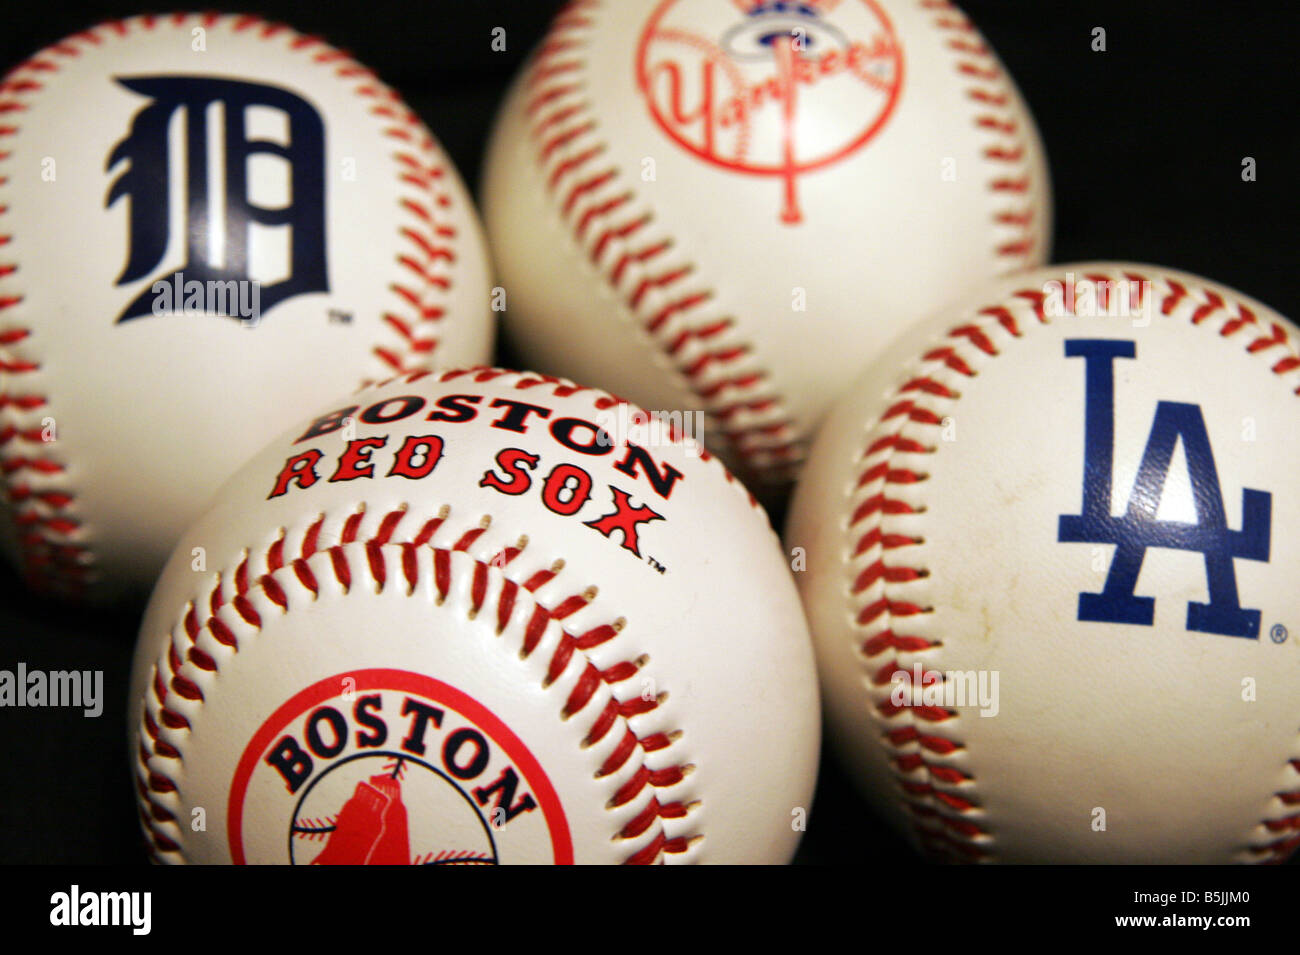 American baseballs and team logos Stock Photo